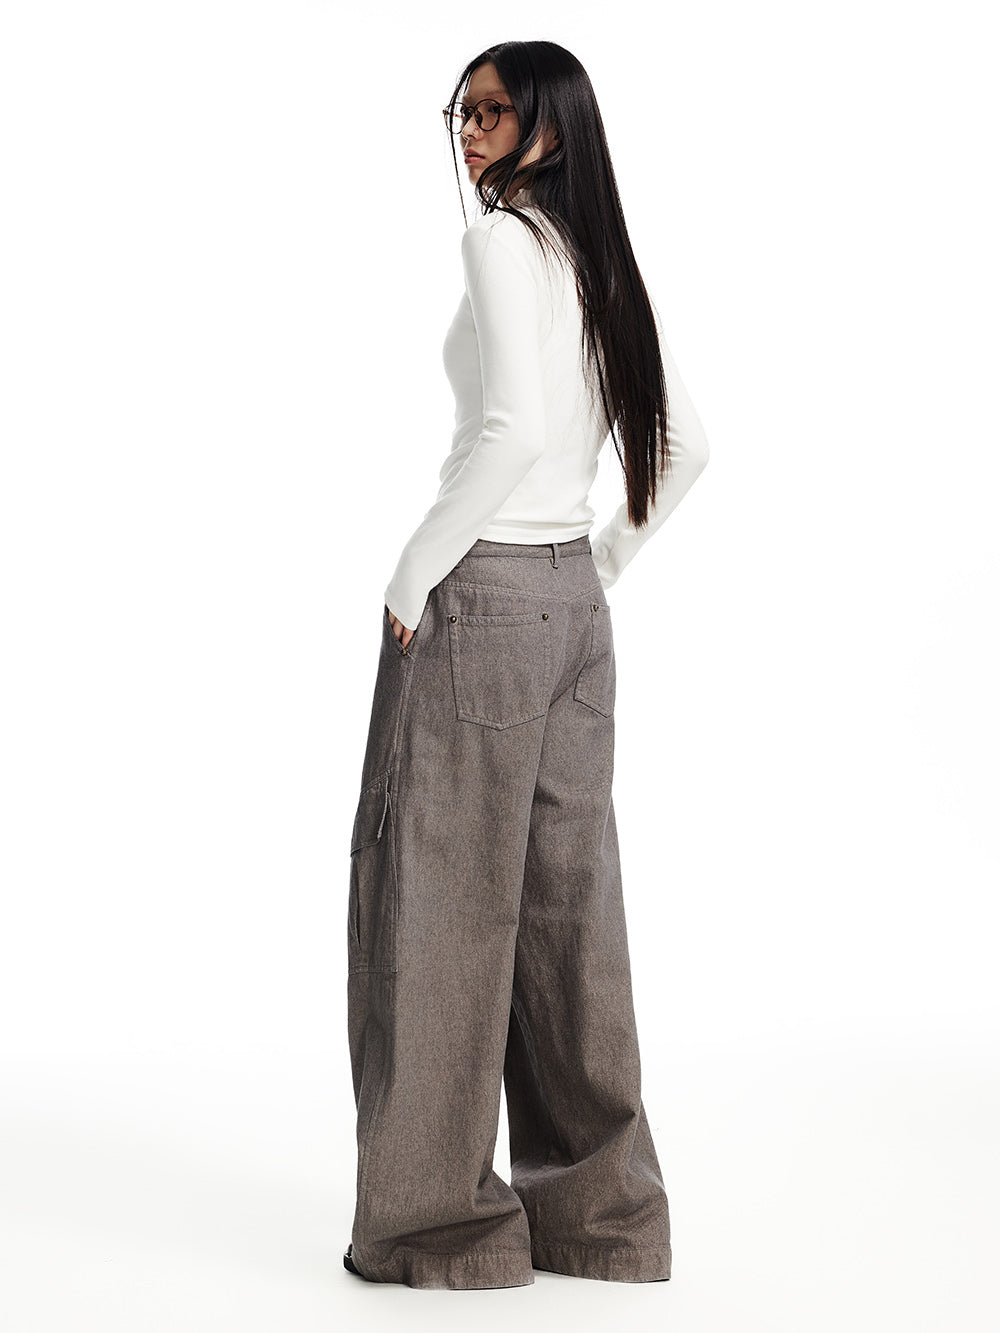 MUKTANK x WESAME LAB Vintage Loose Fit Slimming Versatile Straight Mid-High Waist Jeans